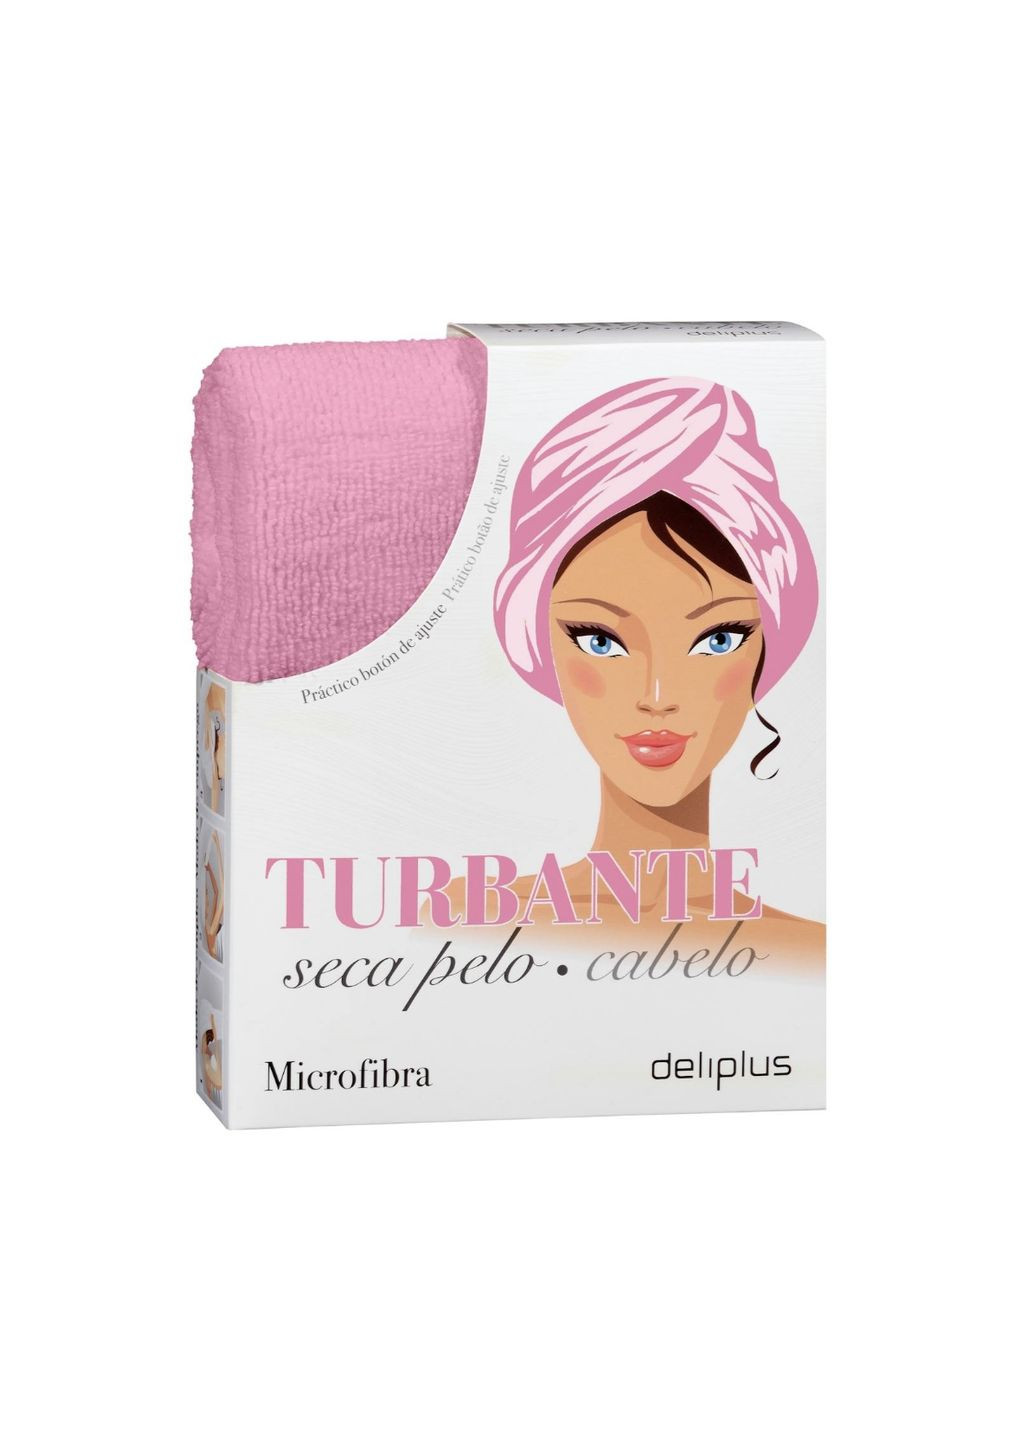 Deliplus полотенце тюрбан для сушки волос однотонный розовый производство - Испания